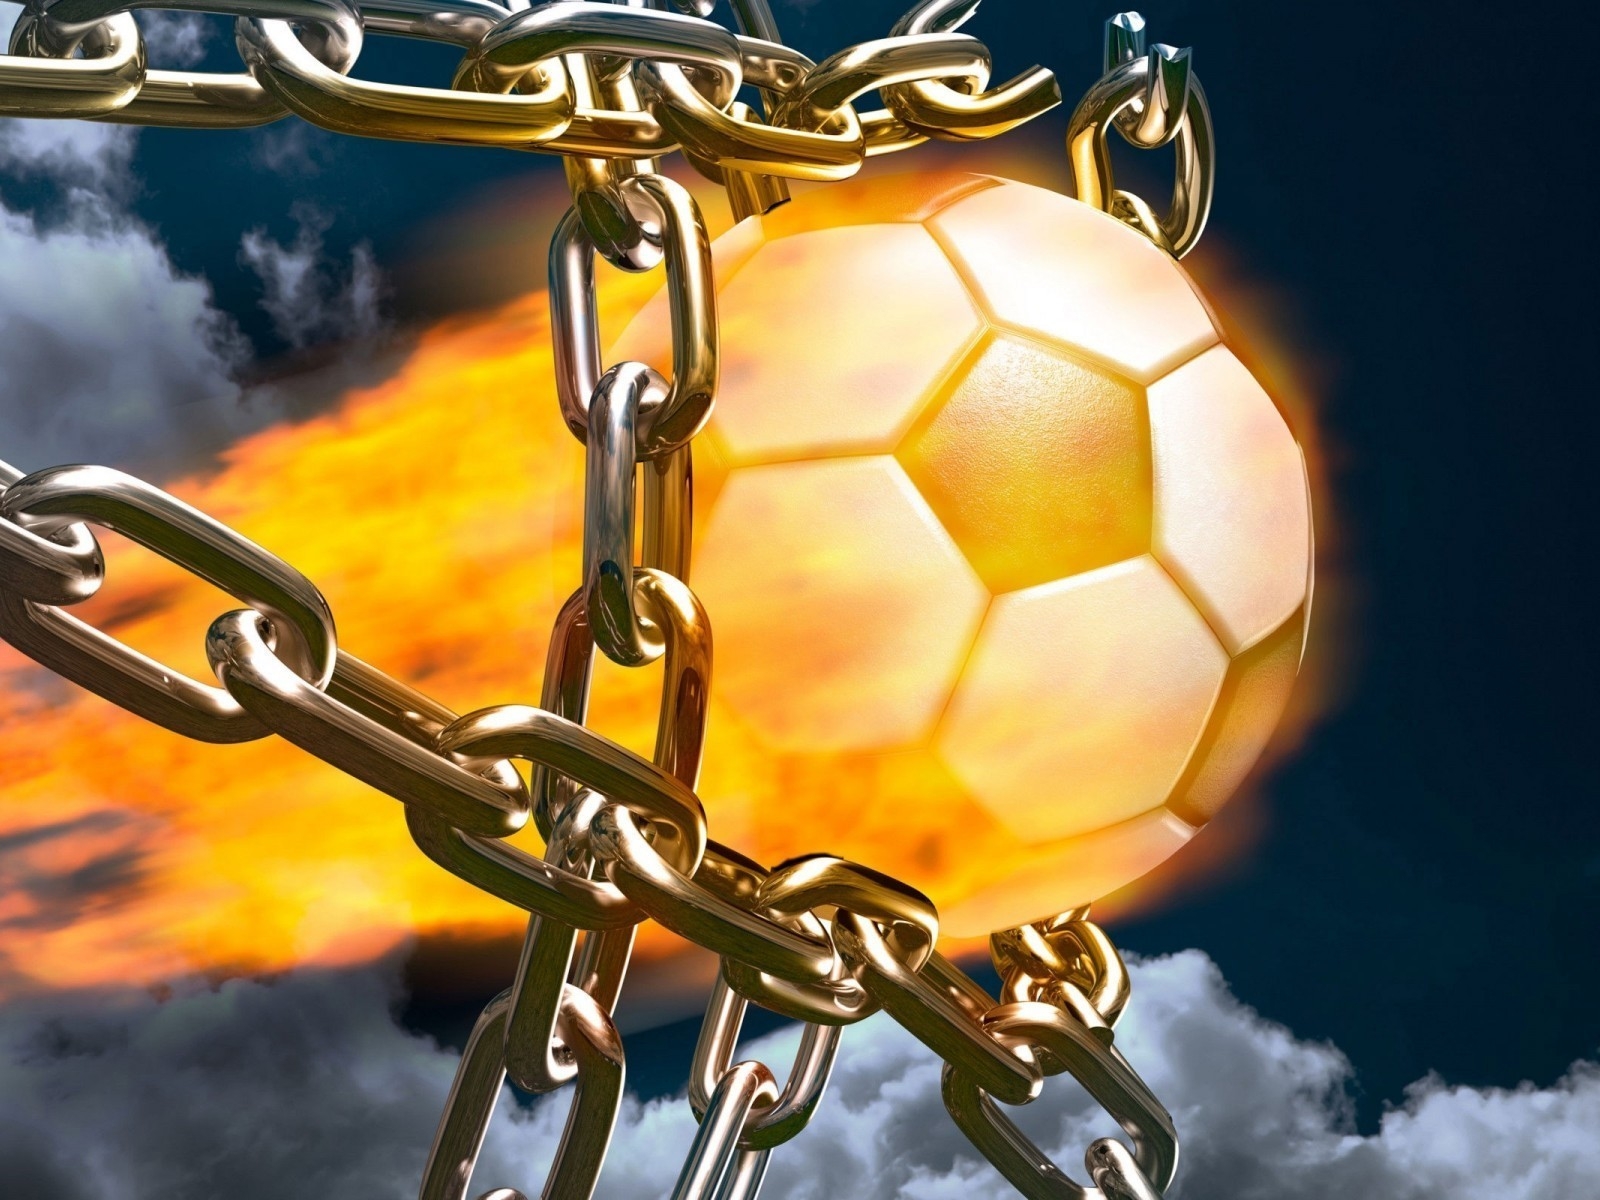 Football Fire Ball for 1600 x 1200 resolution